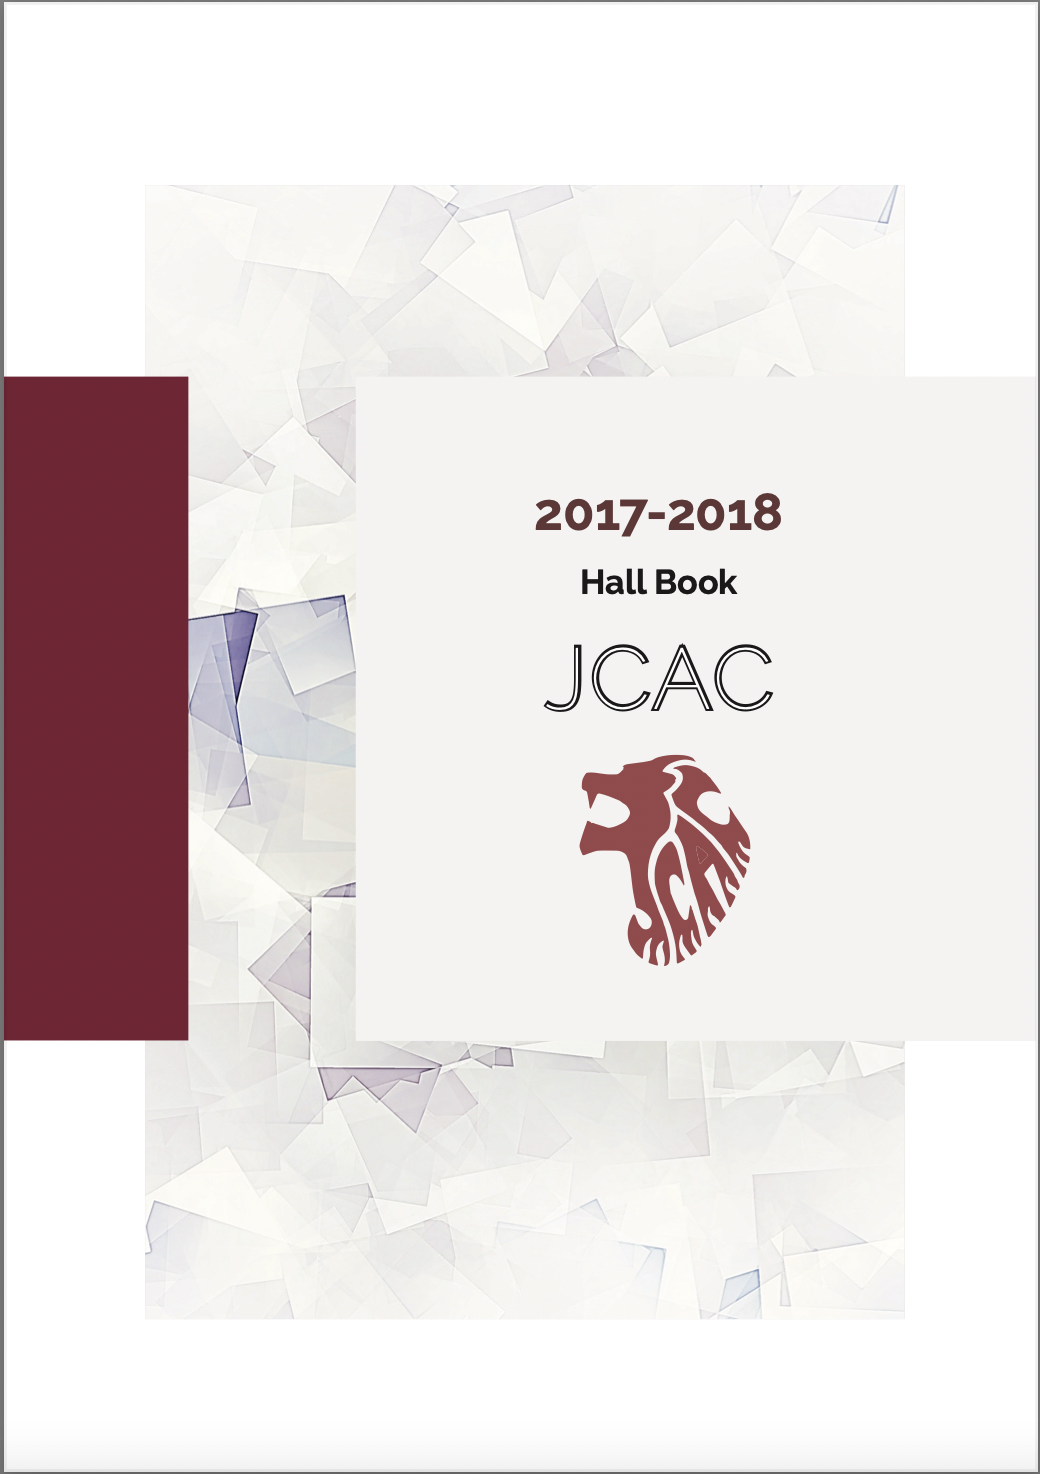 JCAC Hall book 2017-2018